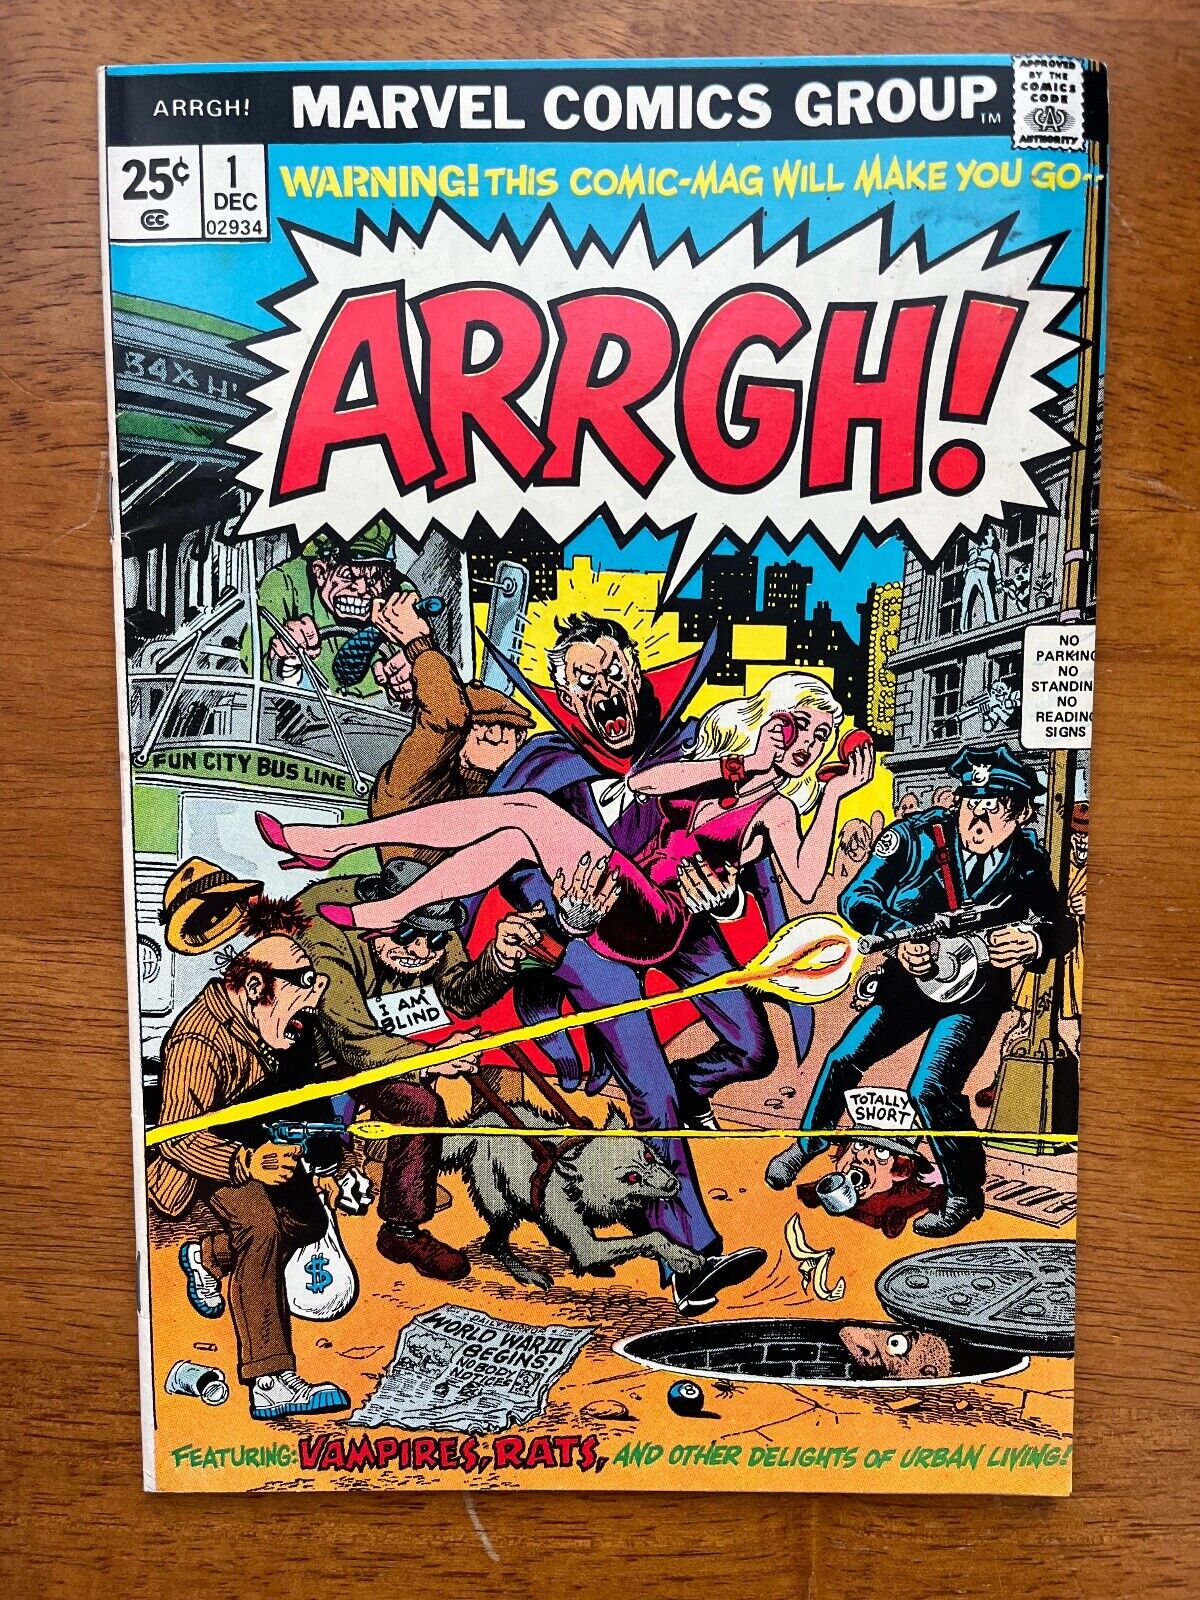 ARRGH 1974 #1 - Marvel  Bronze Age Satire Humor 1974 - 7.5